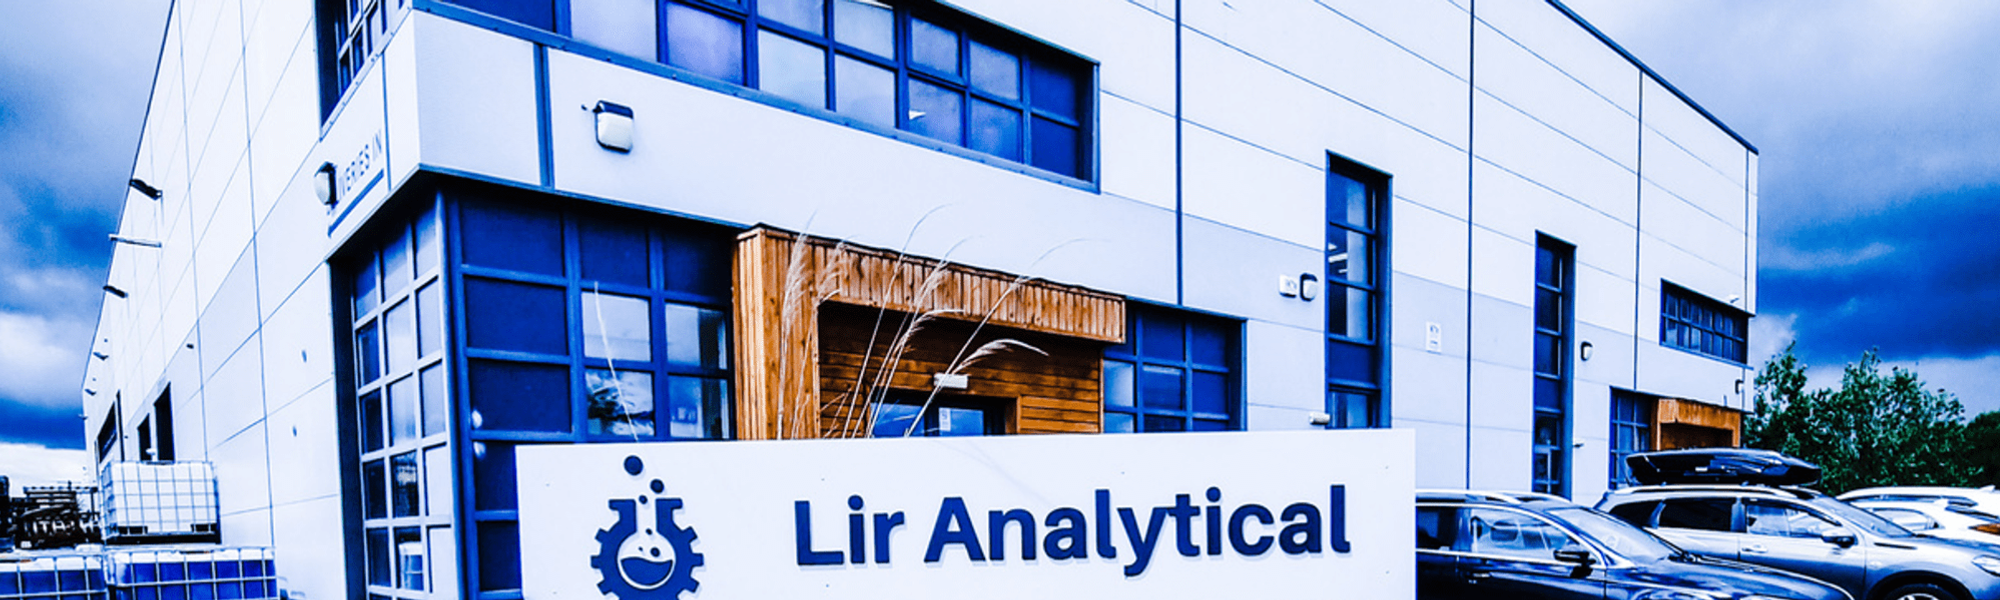 Lir Analytical Facility, Longford, Ireland